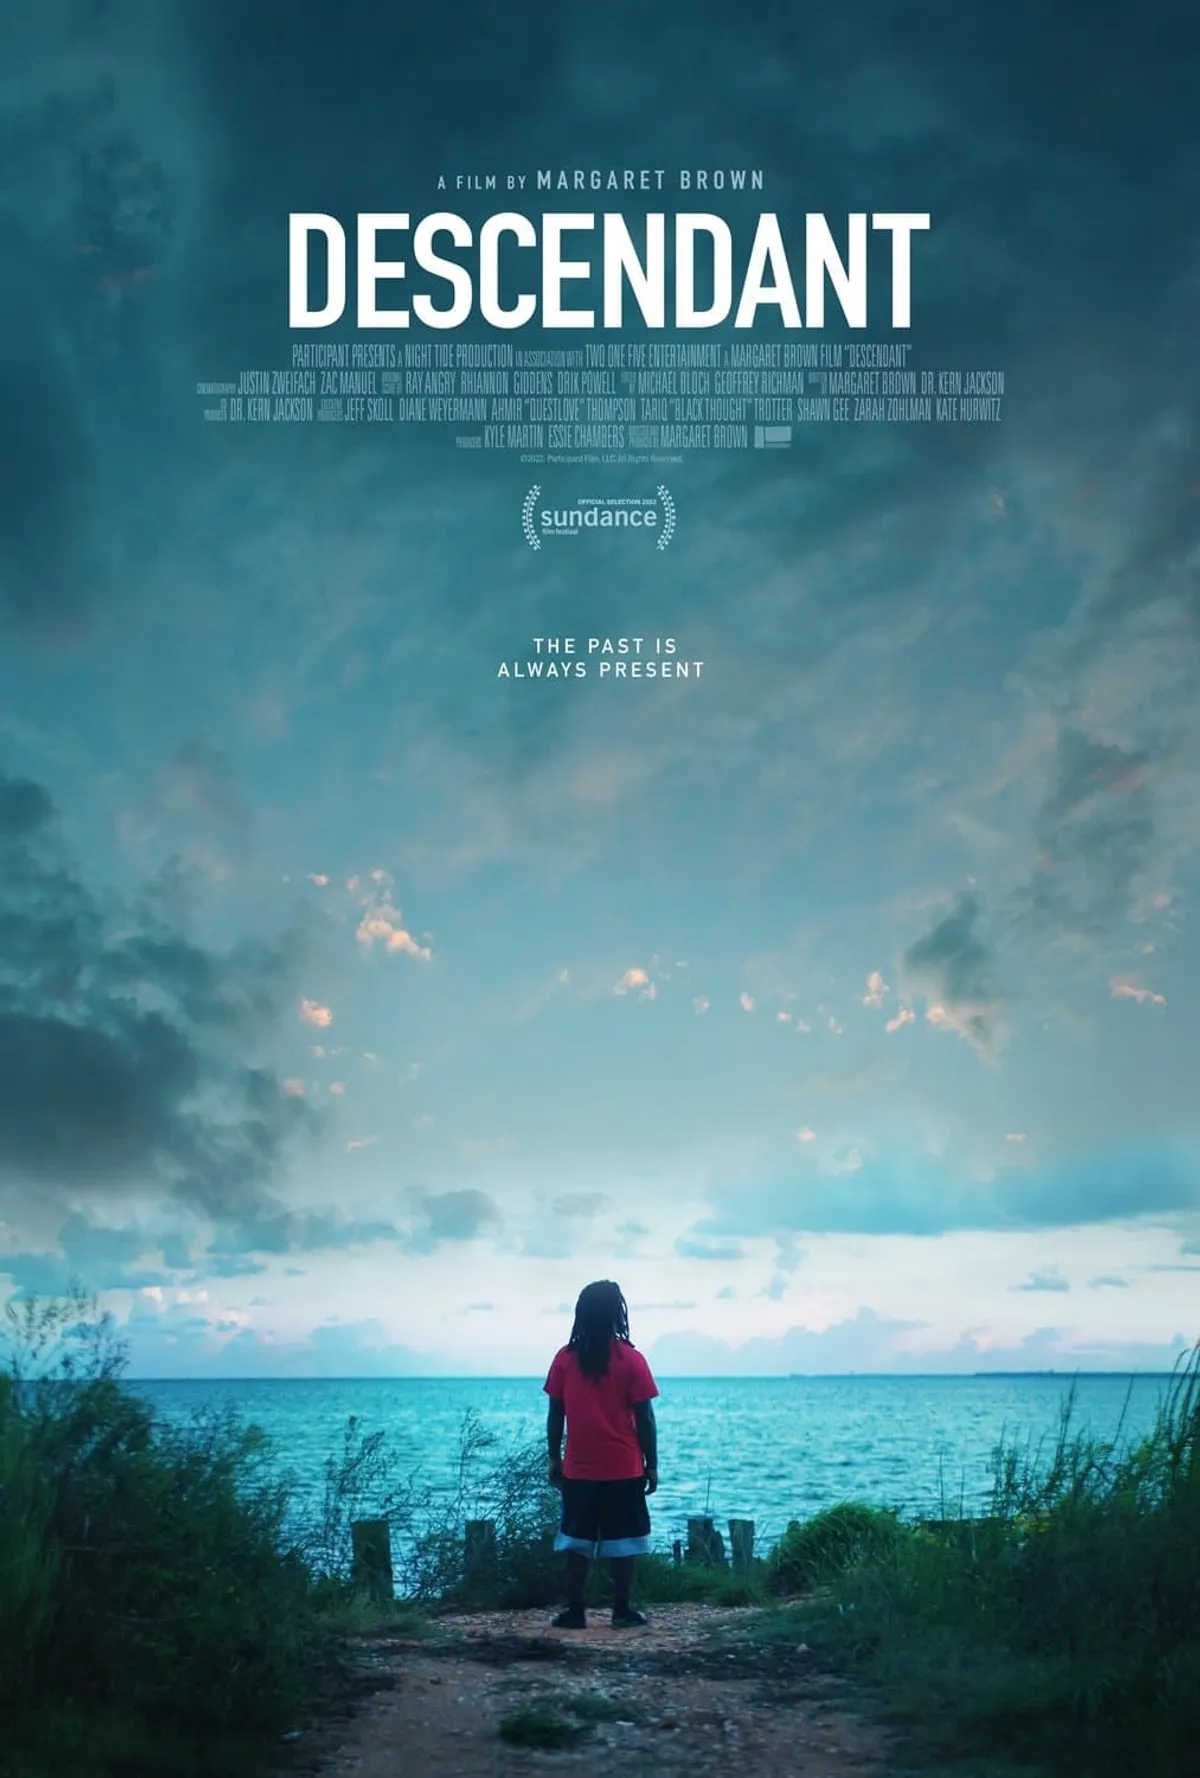 Descendant Movie 2022, Official Trailer, Release Date